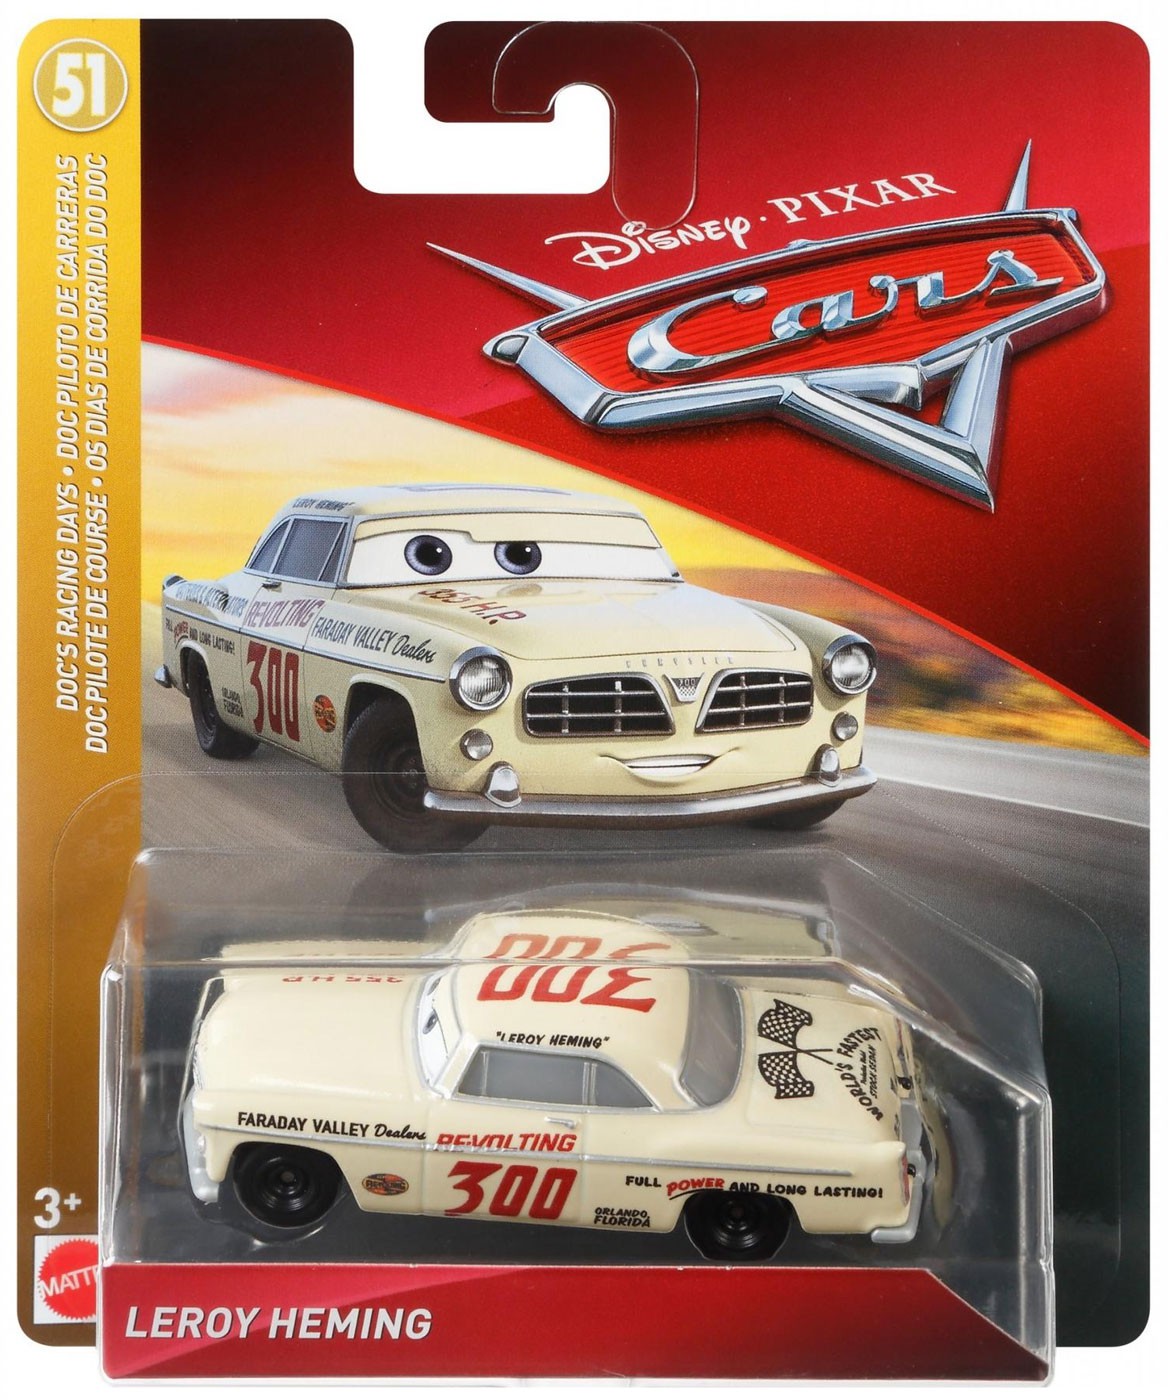 doc hudson toy cars 3